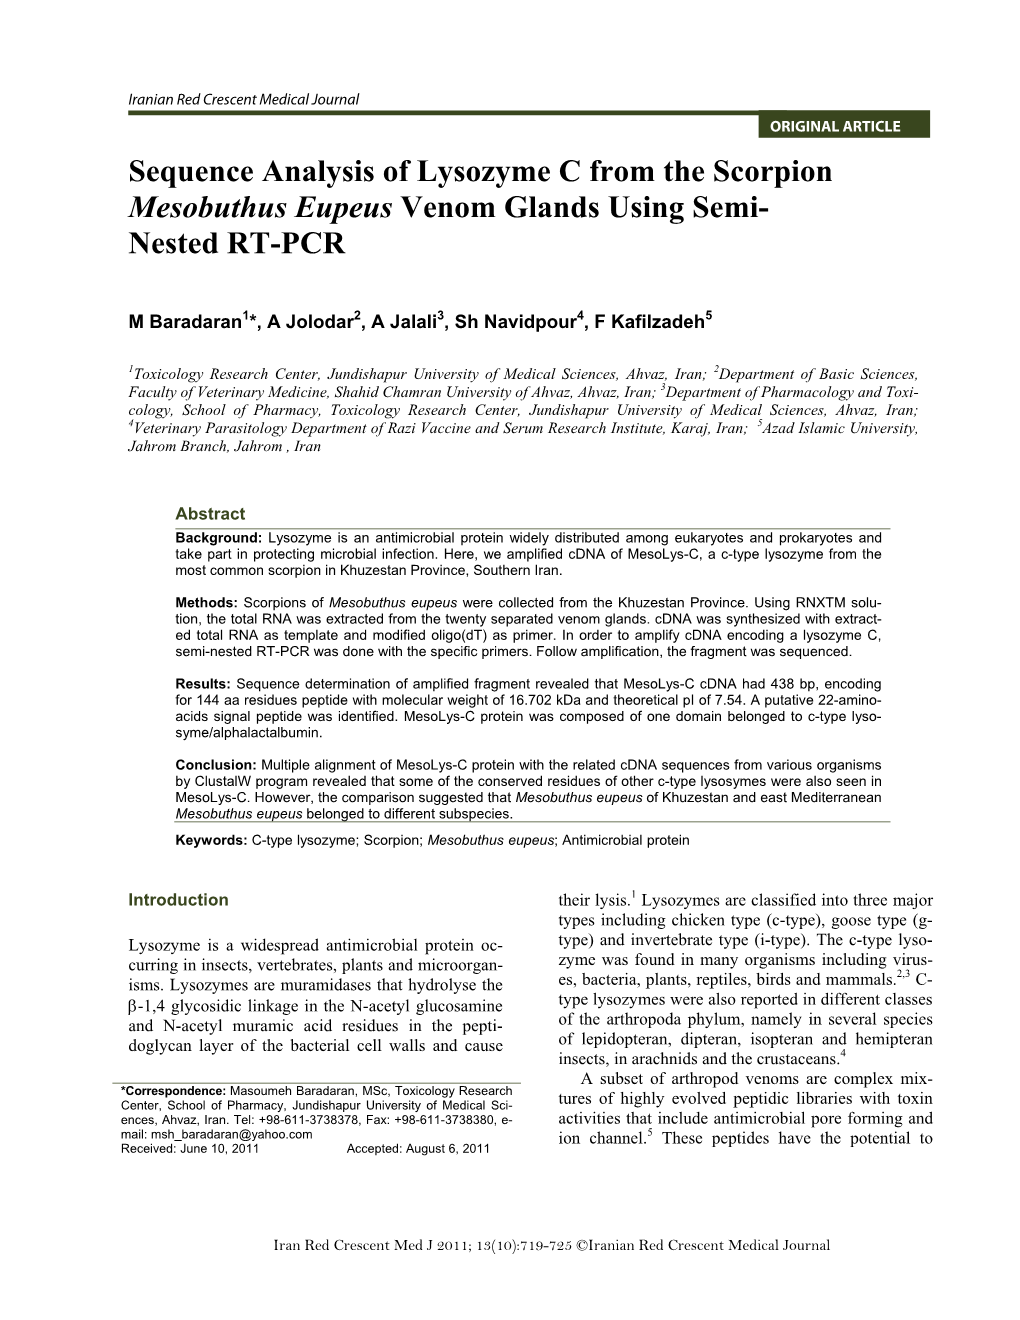 Sequence Analysis of Lysozyme C from the Scorpion Mesobuthus Eupeus Venom Glands Using Semi- Nested RT-PCR